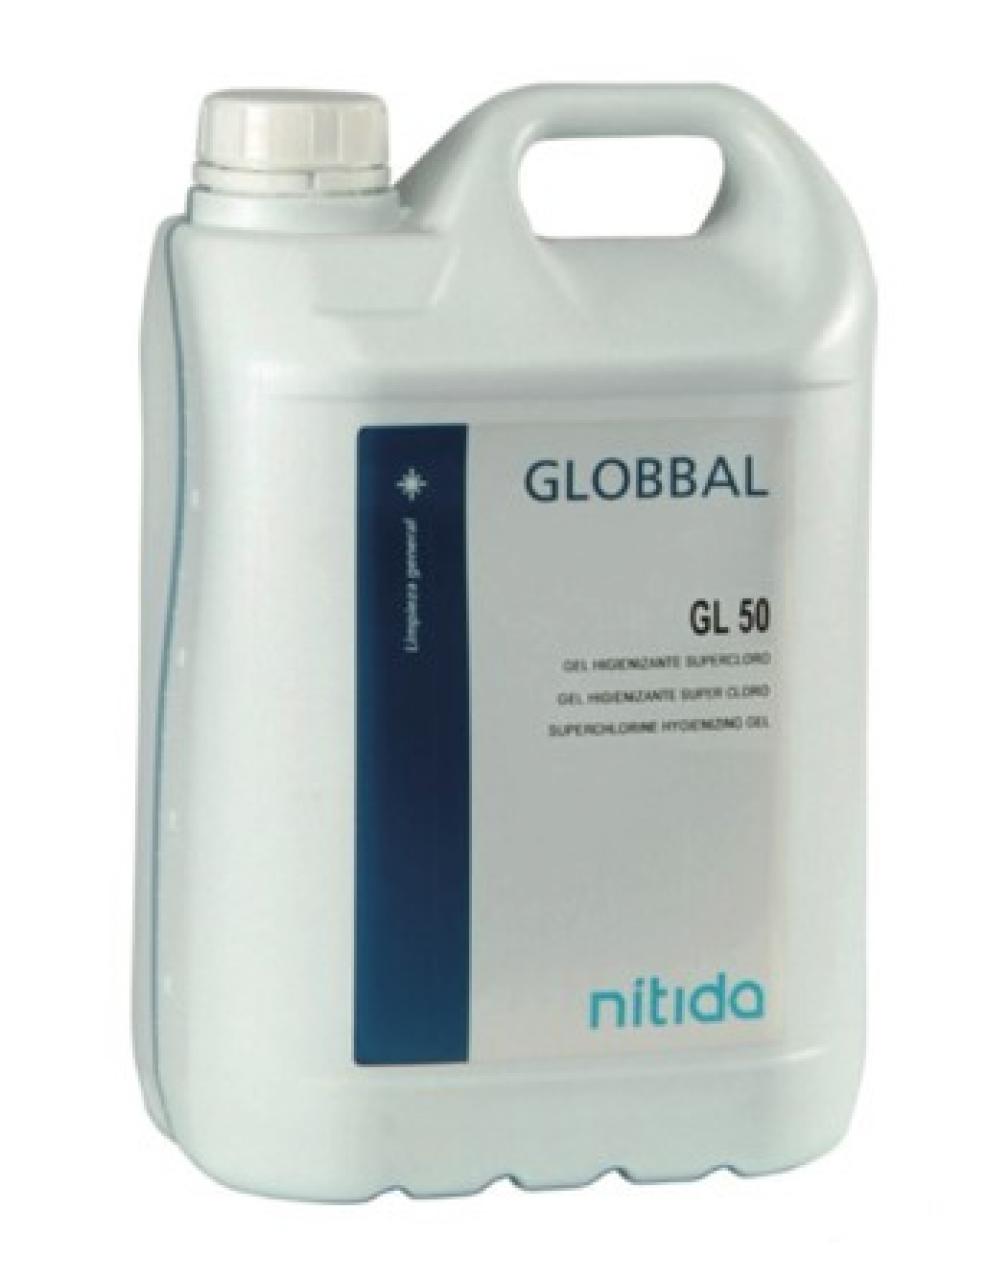 Desinfectante gel clorado GLOBBAL GL 50